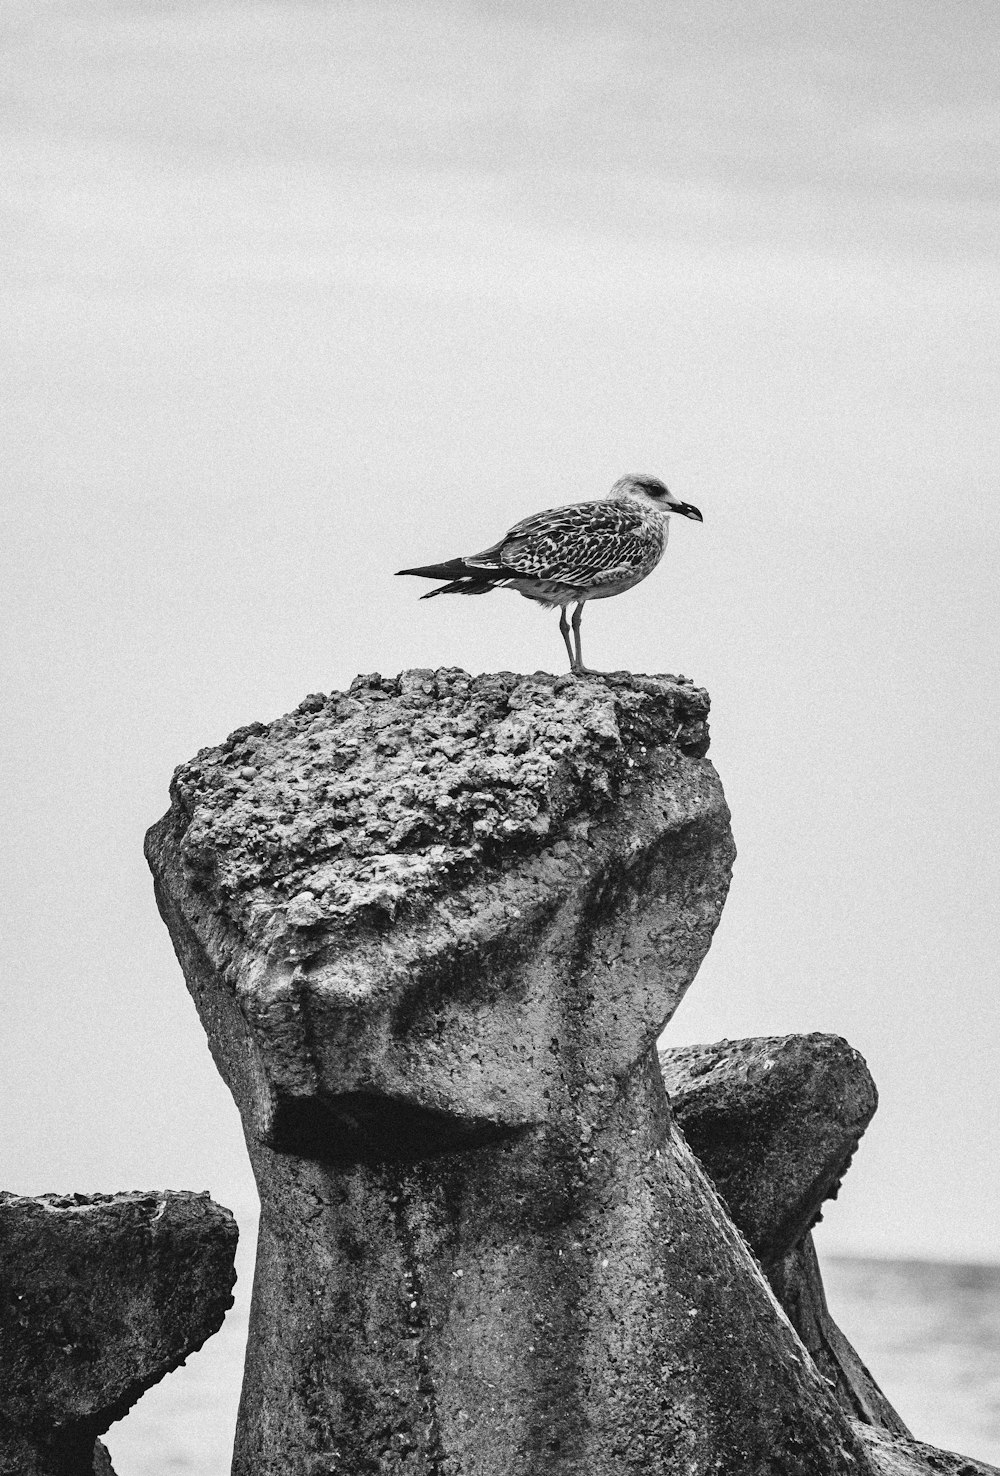 grayscale photo of bird on rock